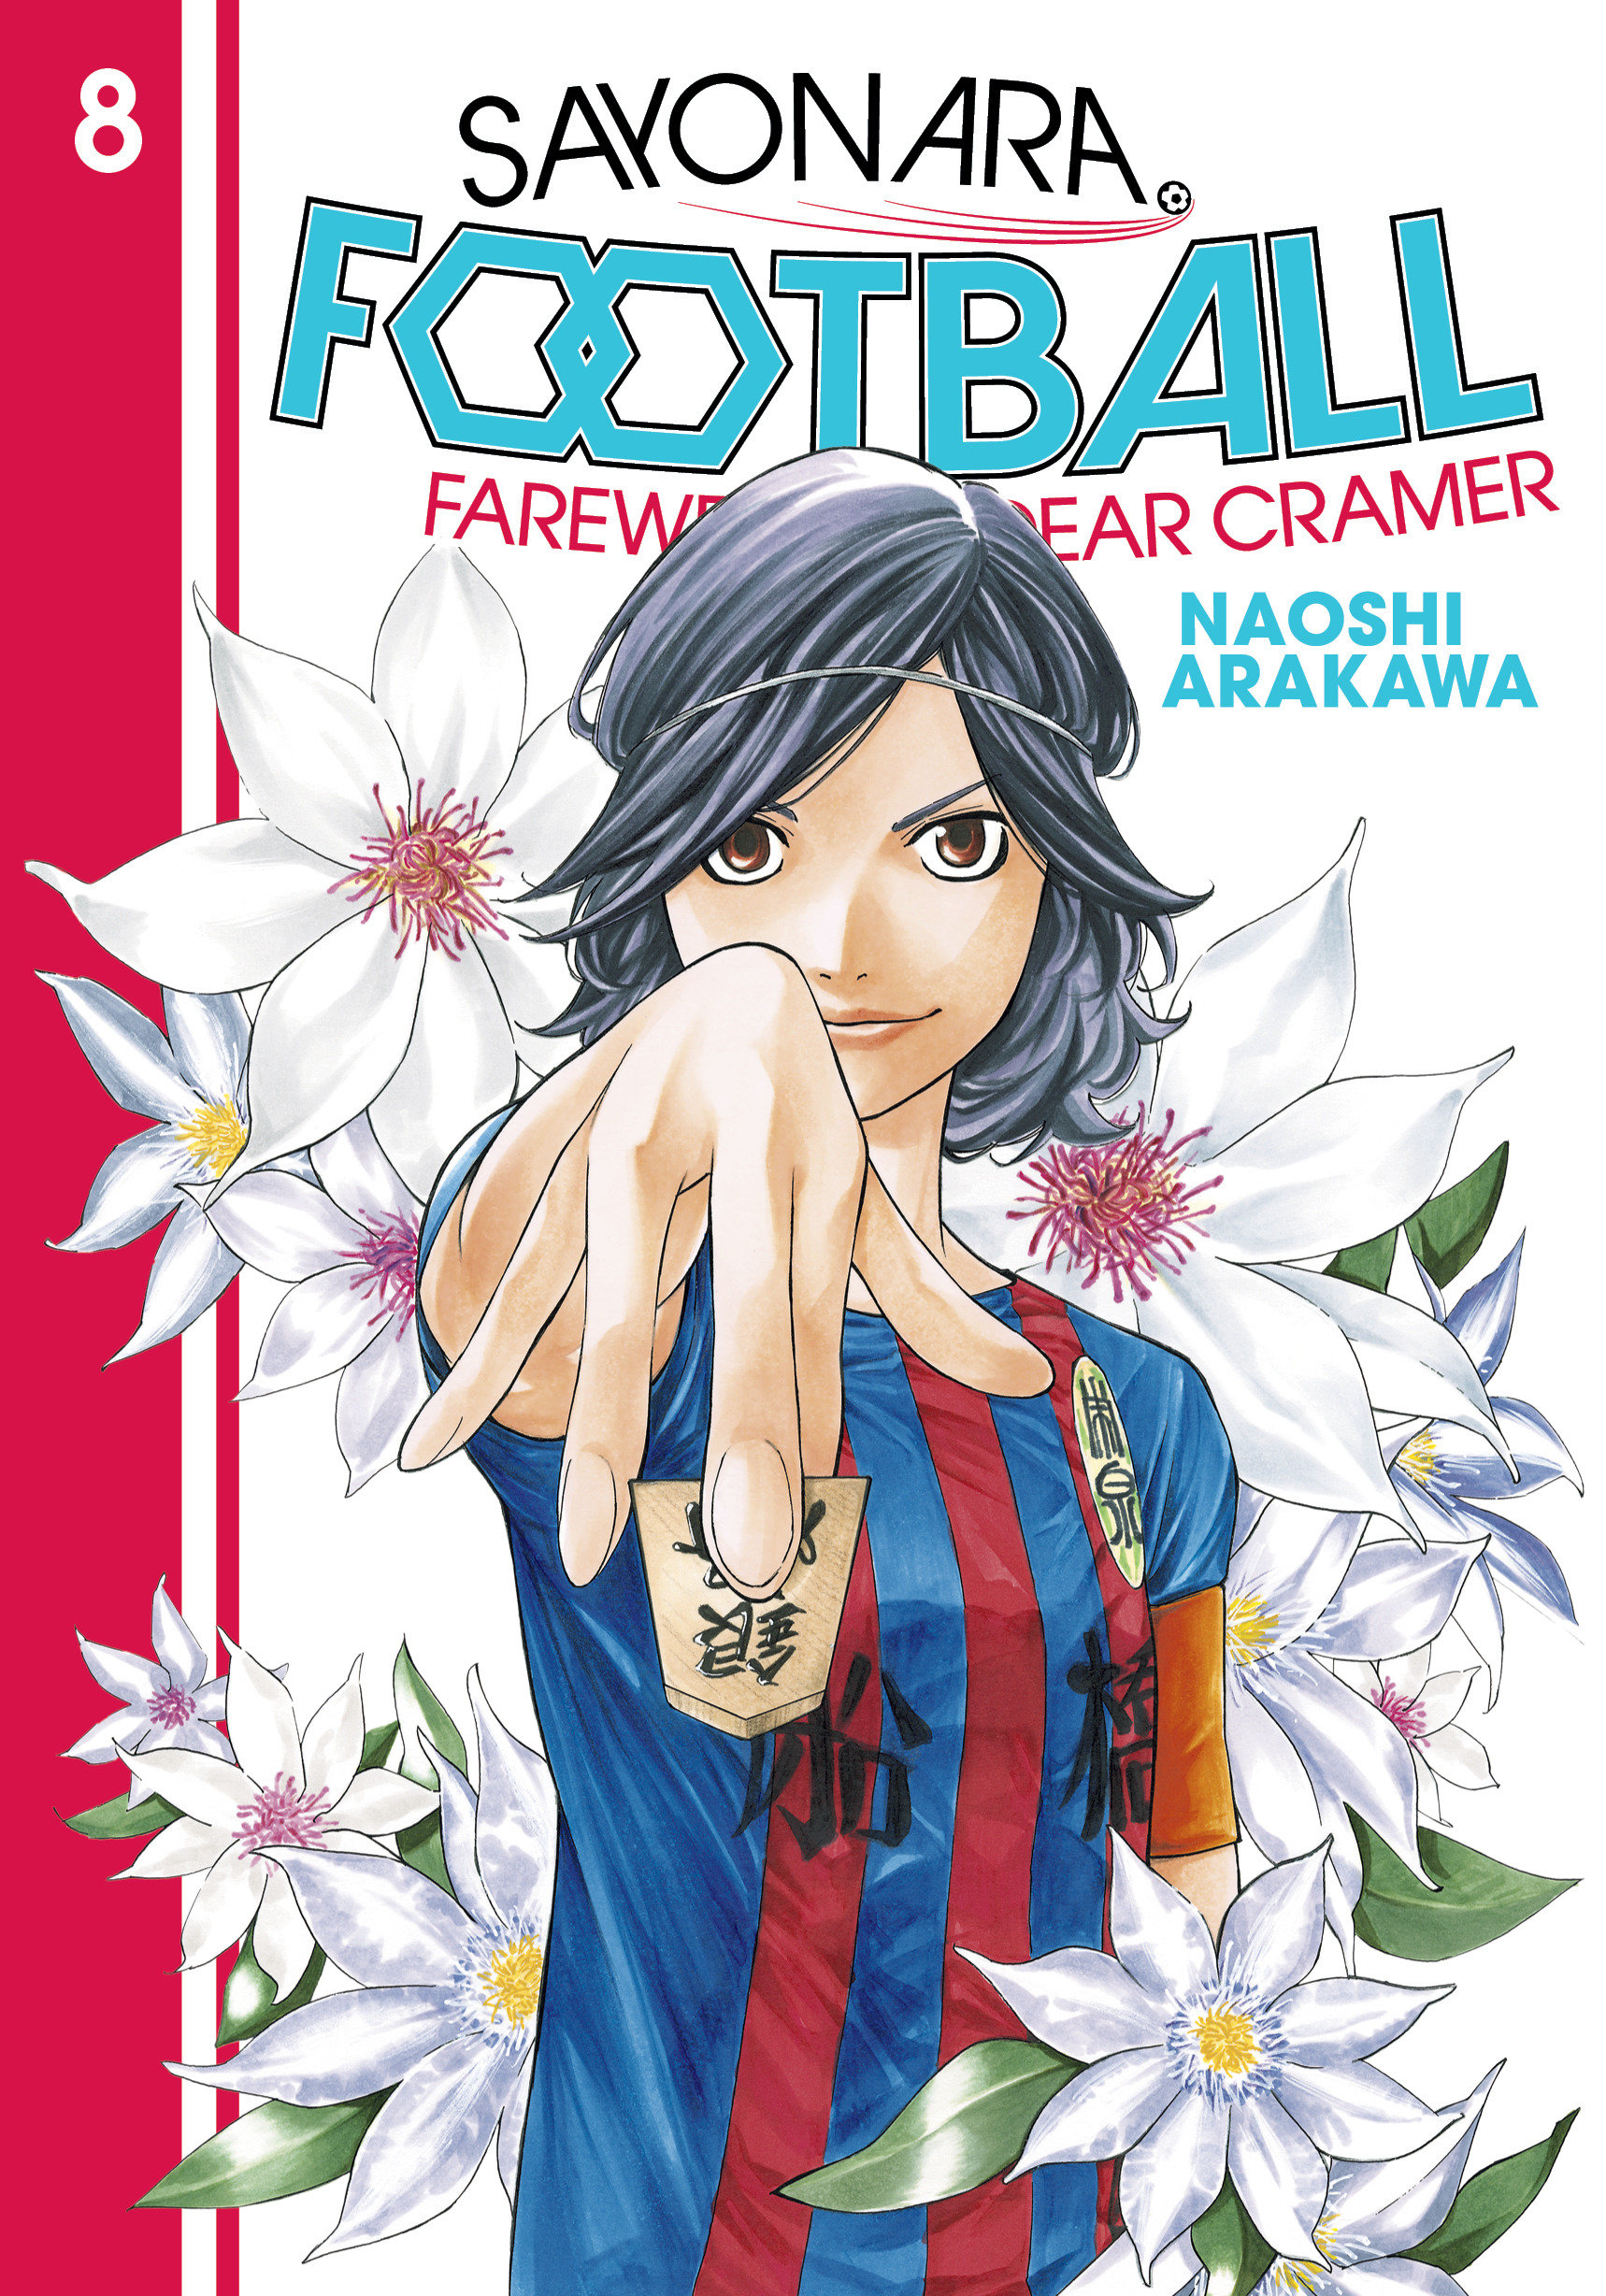 Sayonara Football Manga Volume 8 Farewell My Dear Cramer